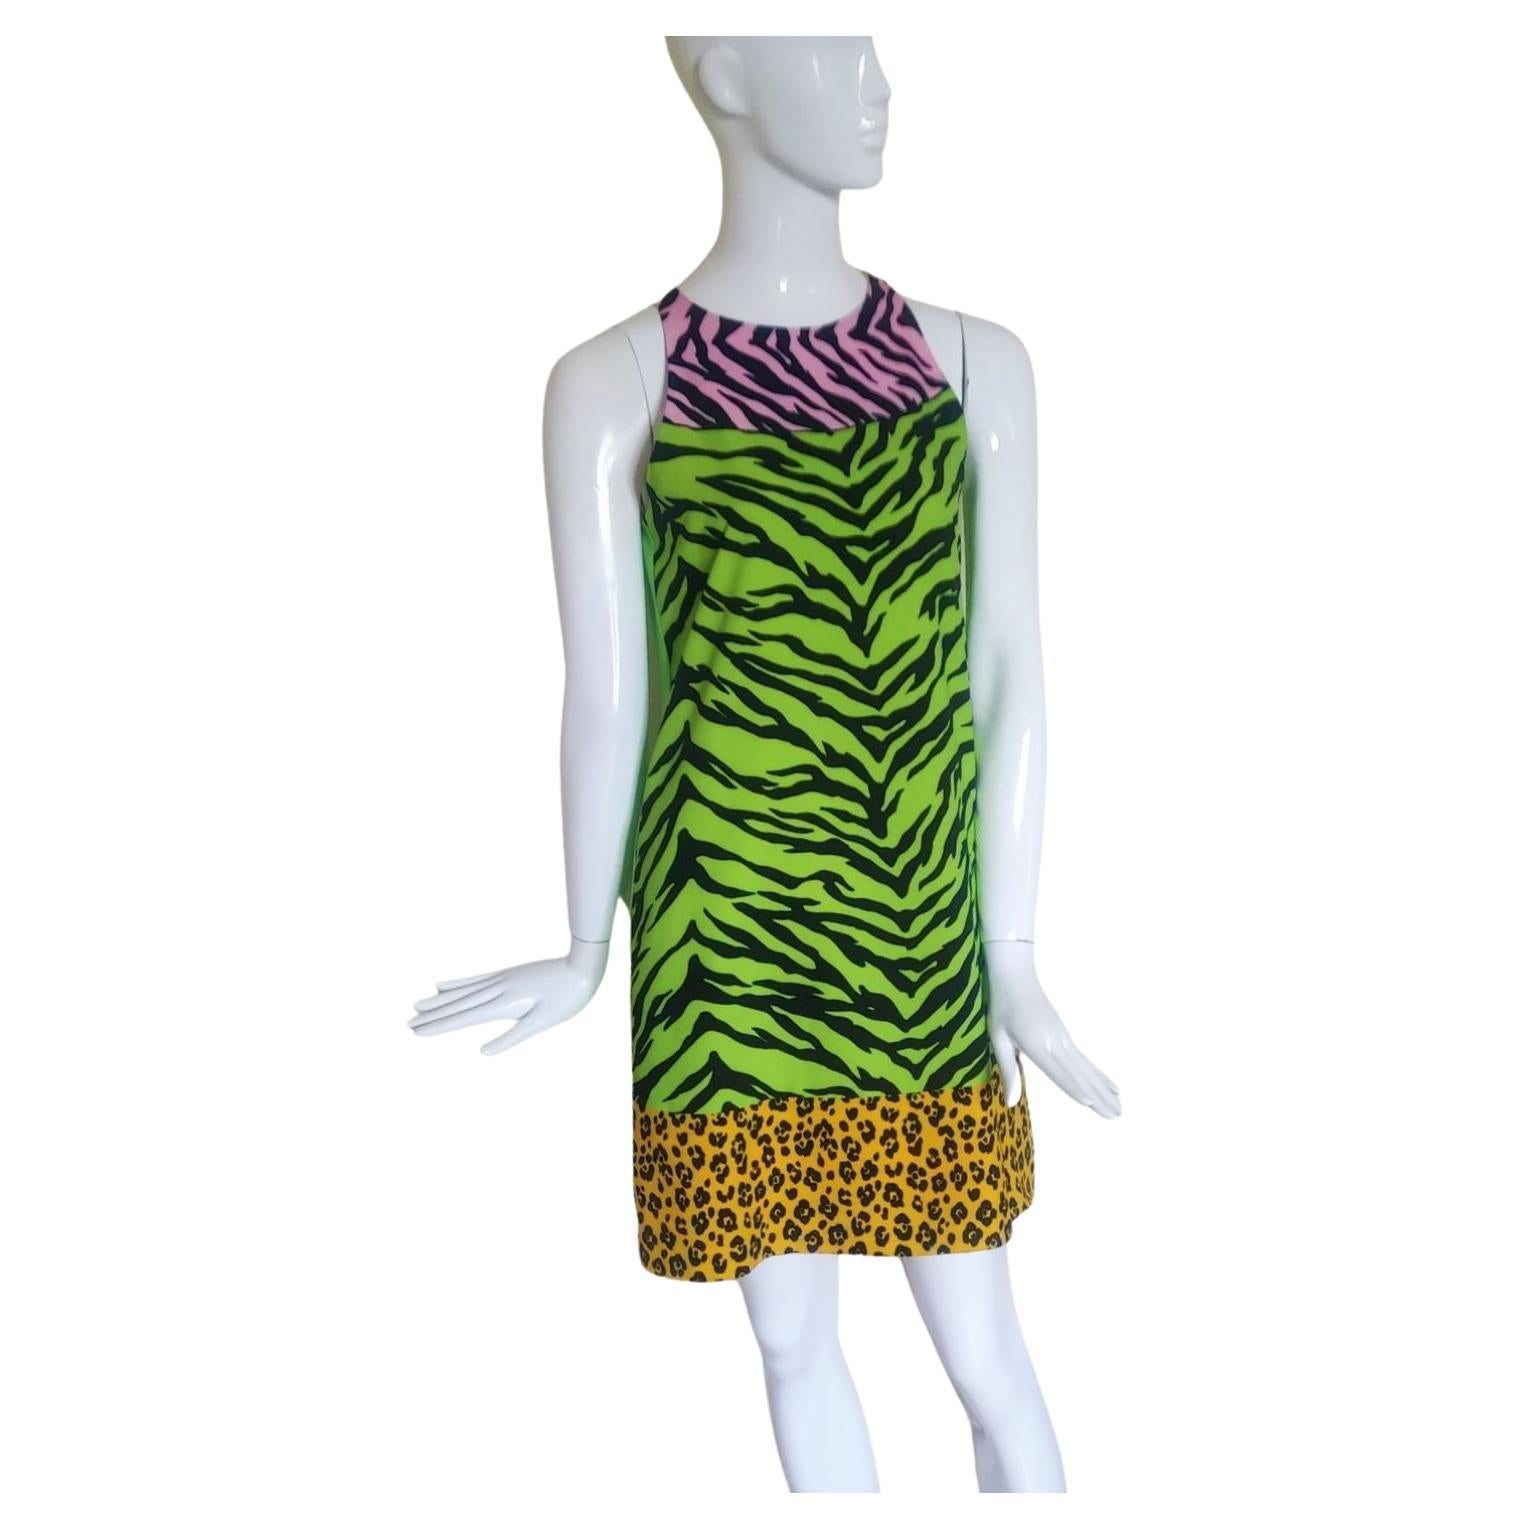 Robe Moschino Flinstones Cheap and Chic imprim lopard tigre, 2015 SS15